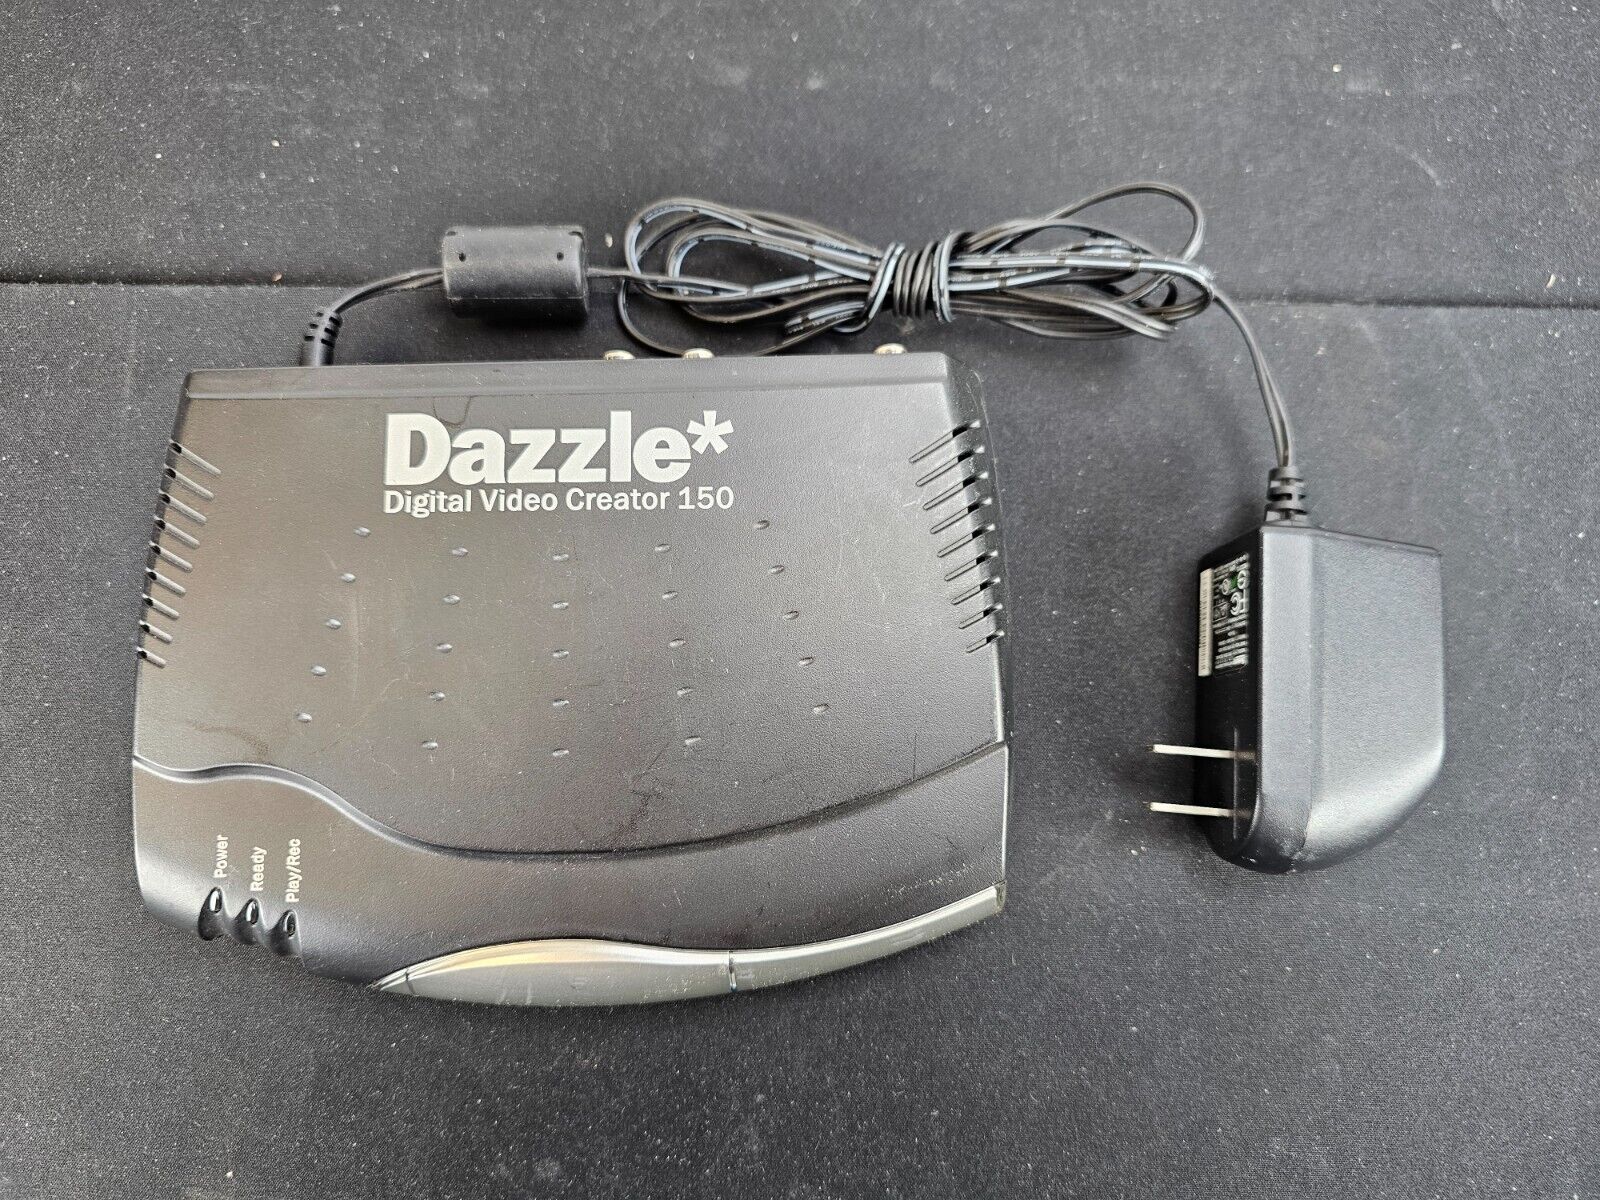 Dazzle Digital Video Creator 150 Hi-Speed USB 2.0 Video Editing System